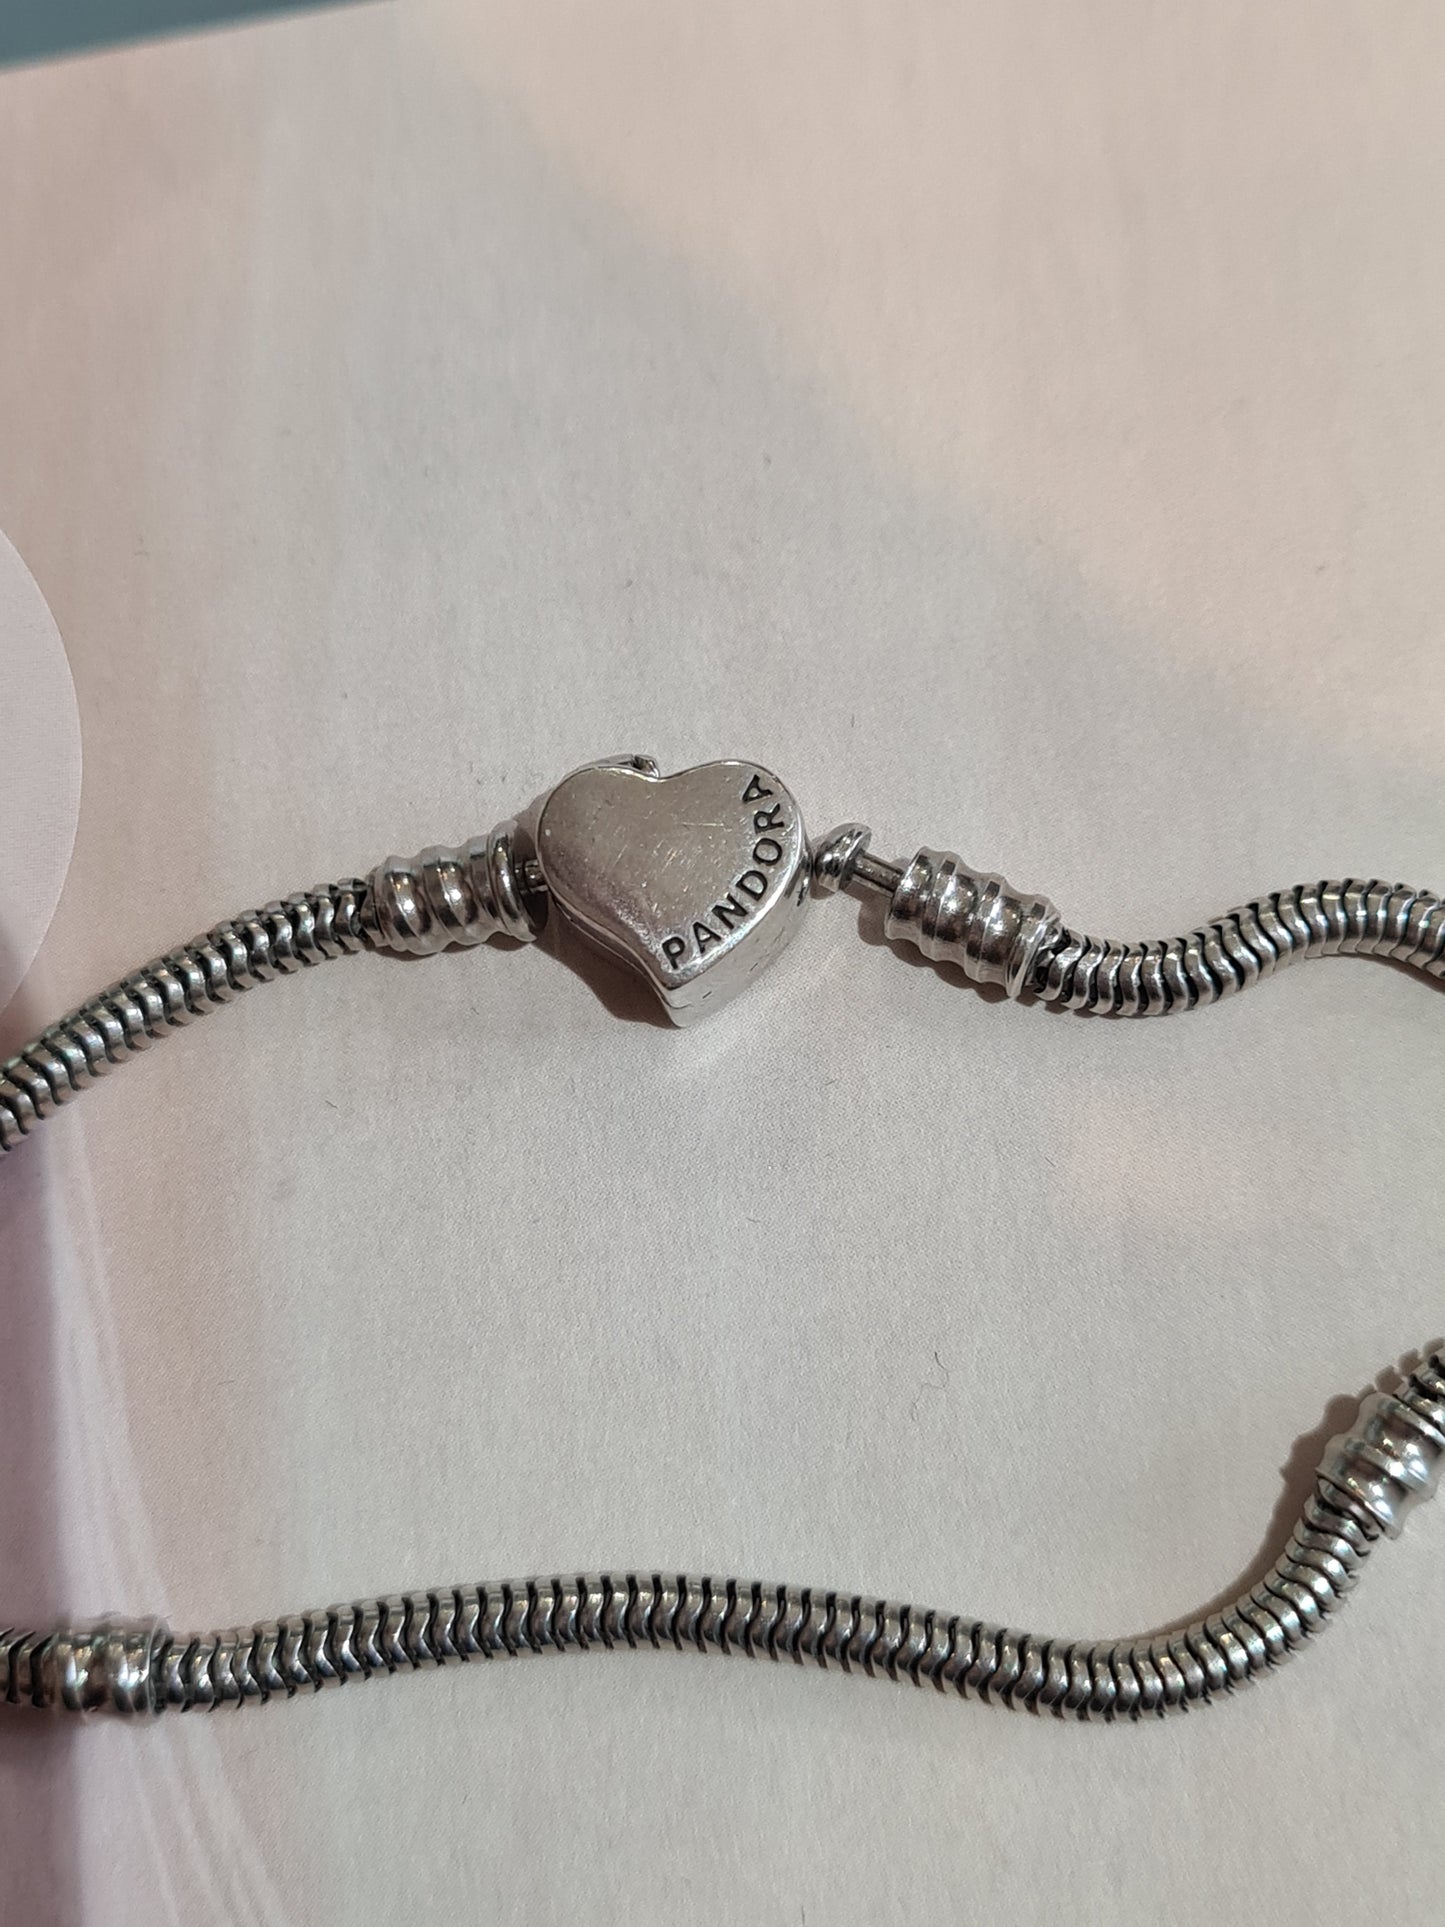 Unbranded Silver Charm Bracelet Heart Clasp 19cm